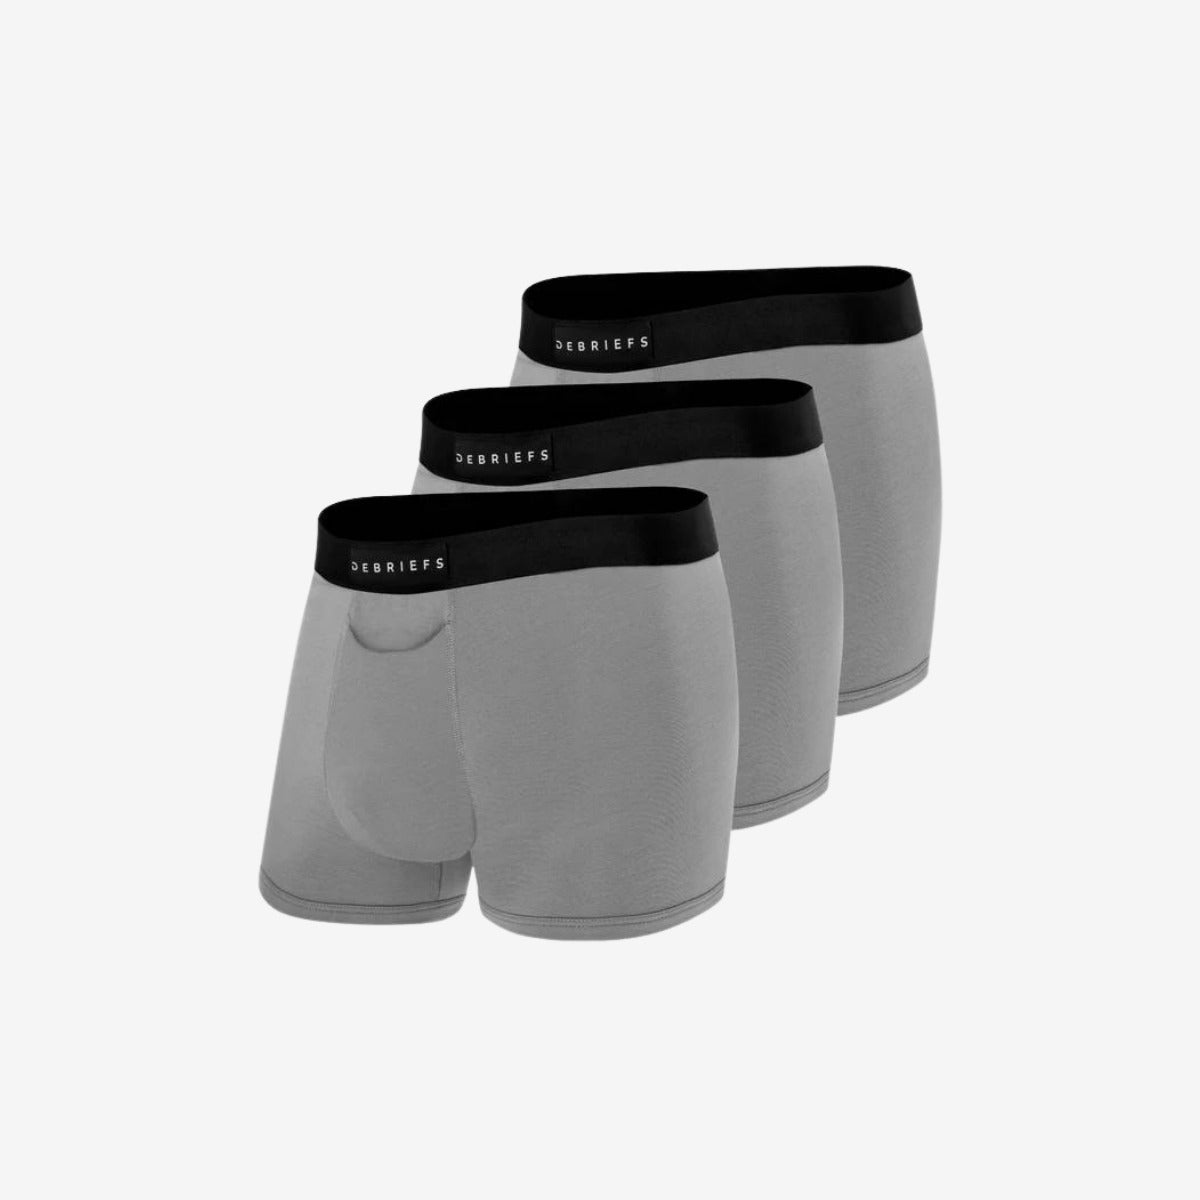 Mens Trunks Underwear Australia 3 Pack - All Grey